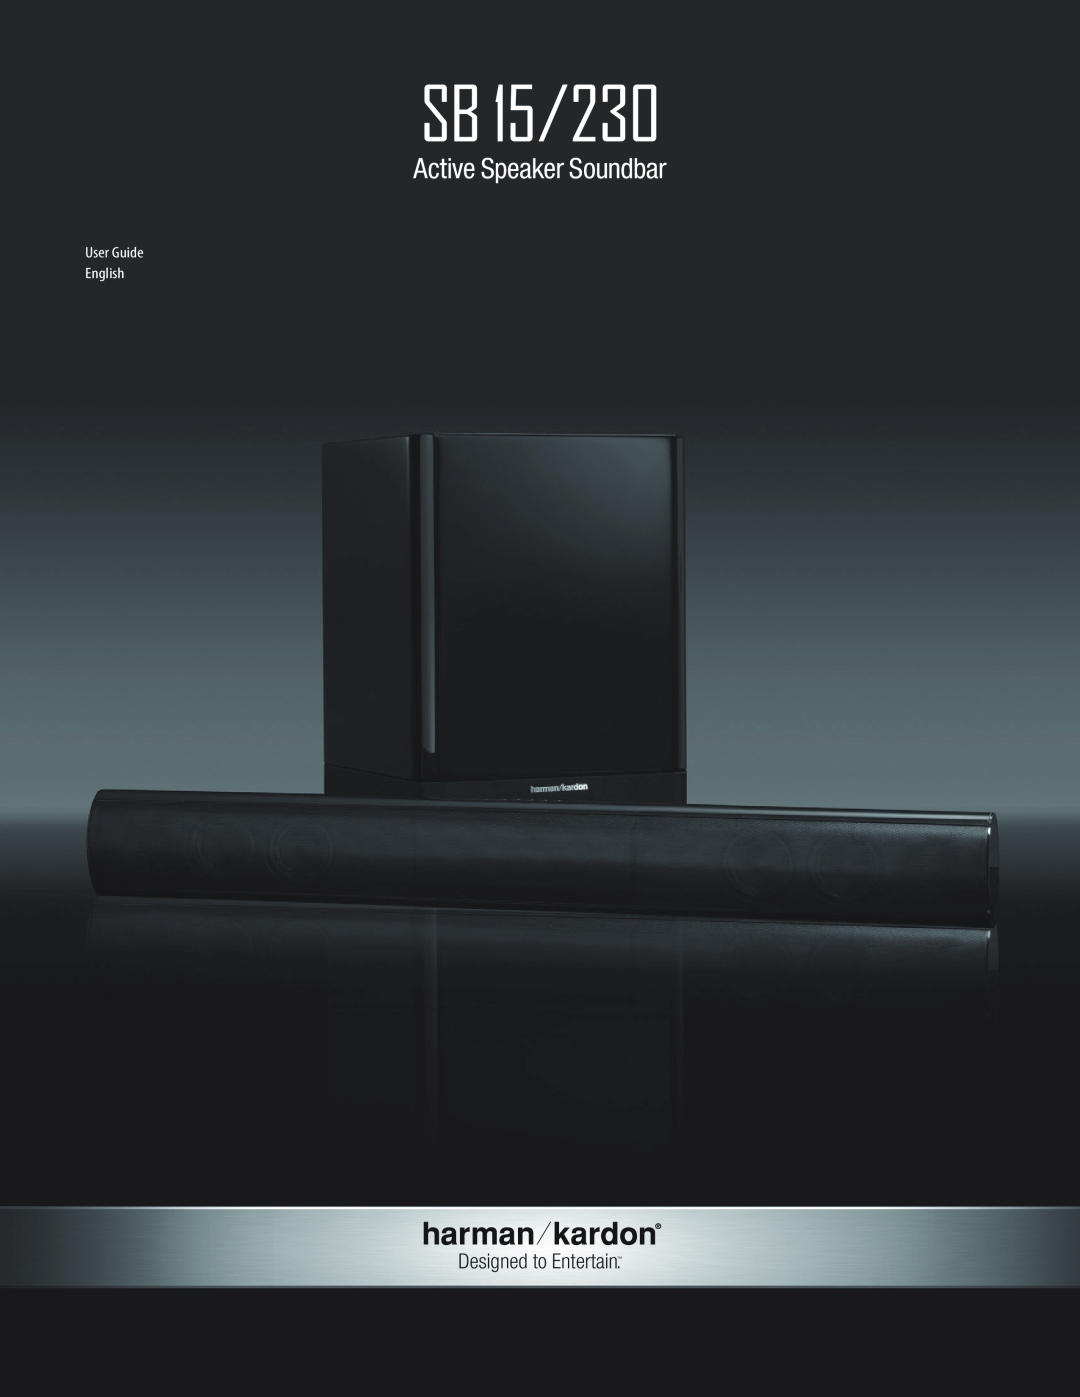 Harman-Kardon SB15/230 manual SB 15/230, Active Speaker Soundbar, Designed to Entertain, User Guide English 